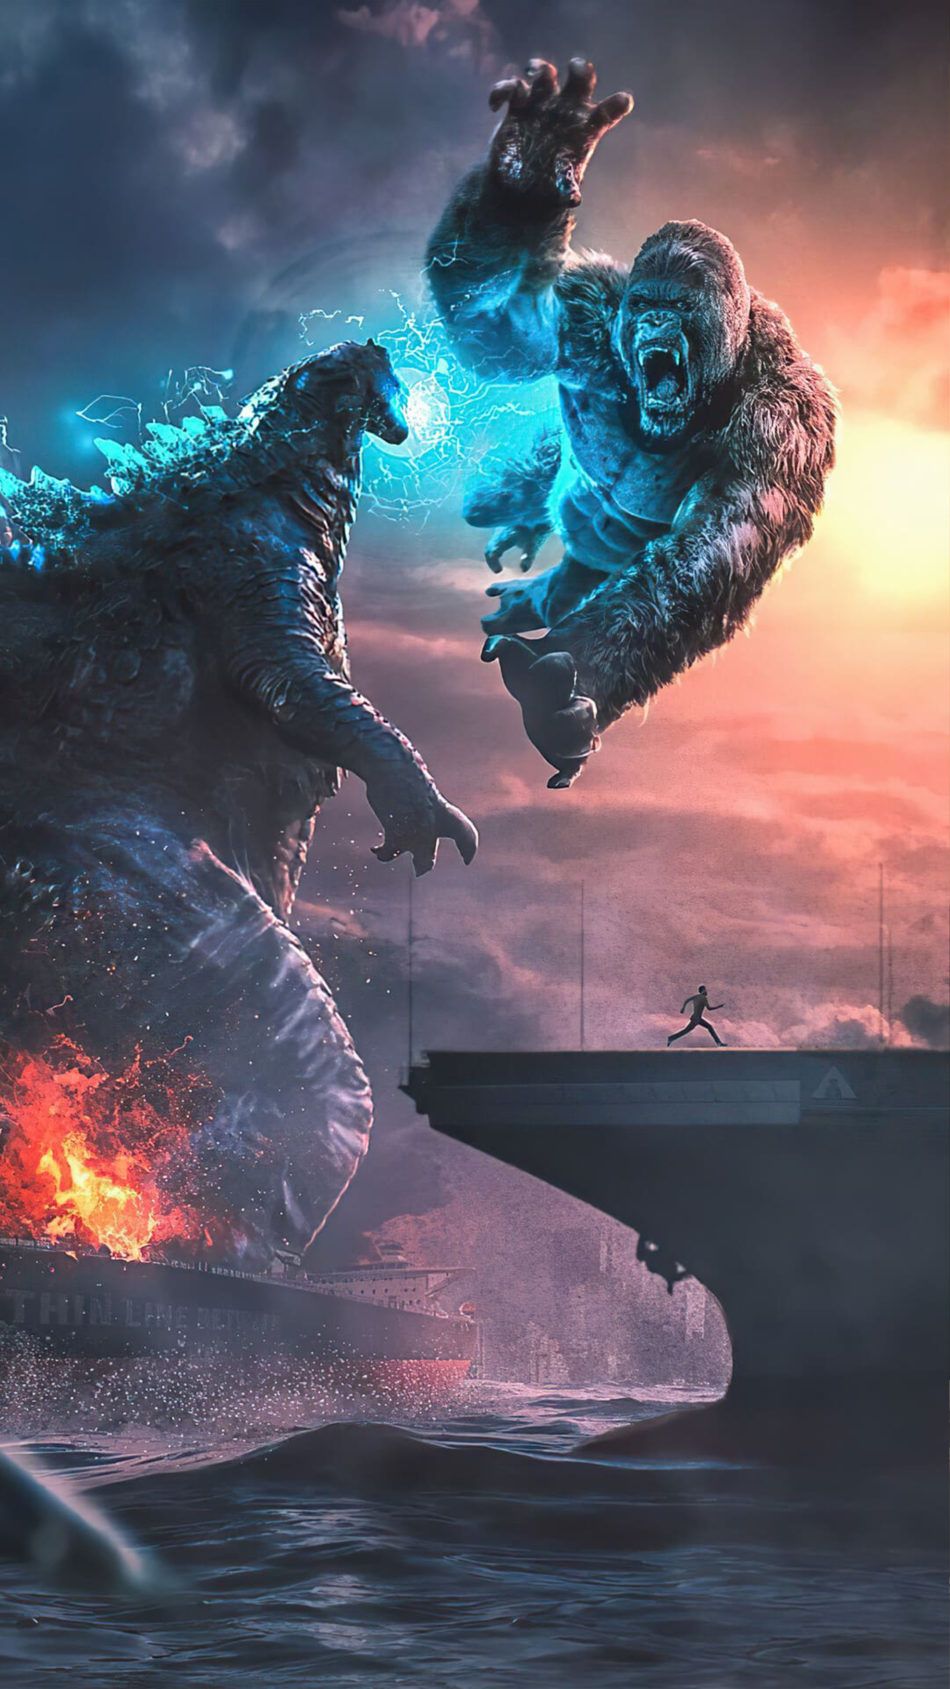 Godzilla Vs Kong Fighting 4K Ultra HD Mobile Wallpaper. Godzilla wallpaper, King kong vs godzilla, Godzilla vs kong